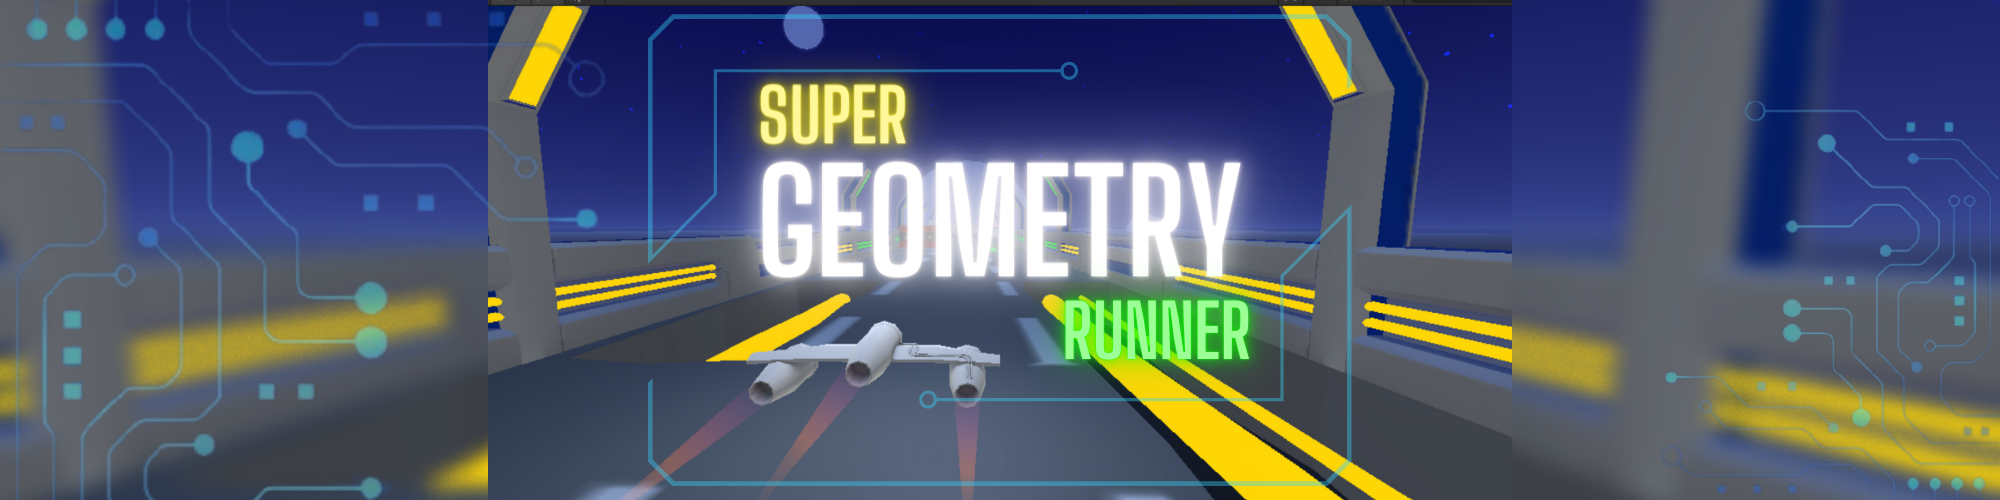 SuperGeometryRunner